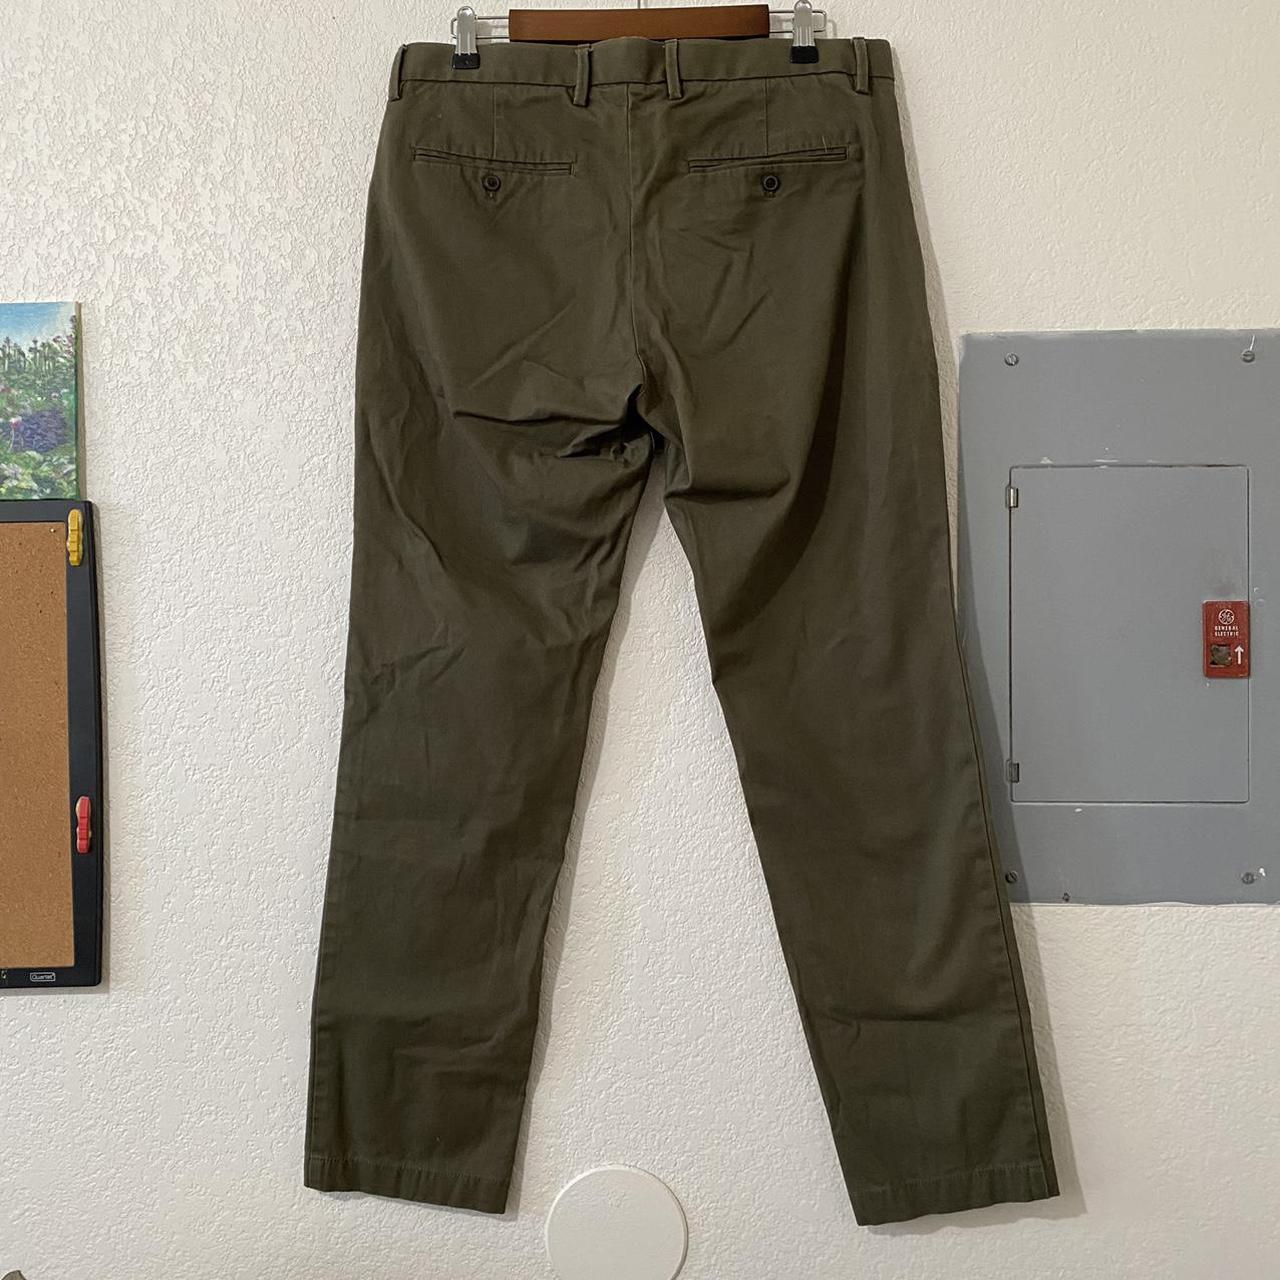 Product Image 3 - GAP Dark Green Pants ✔️

-size: